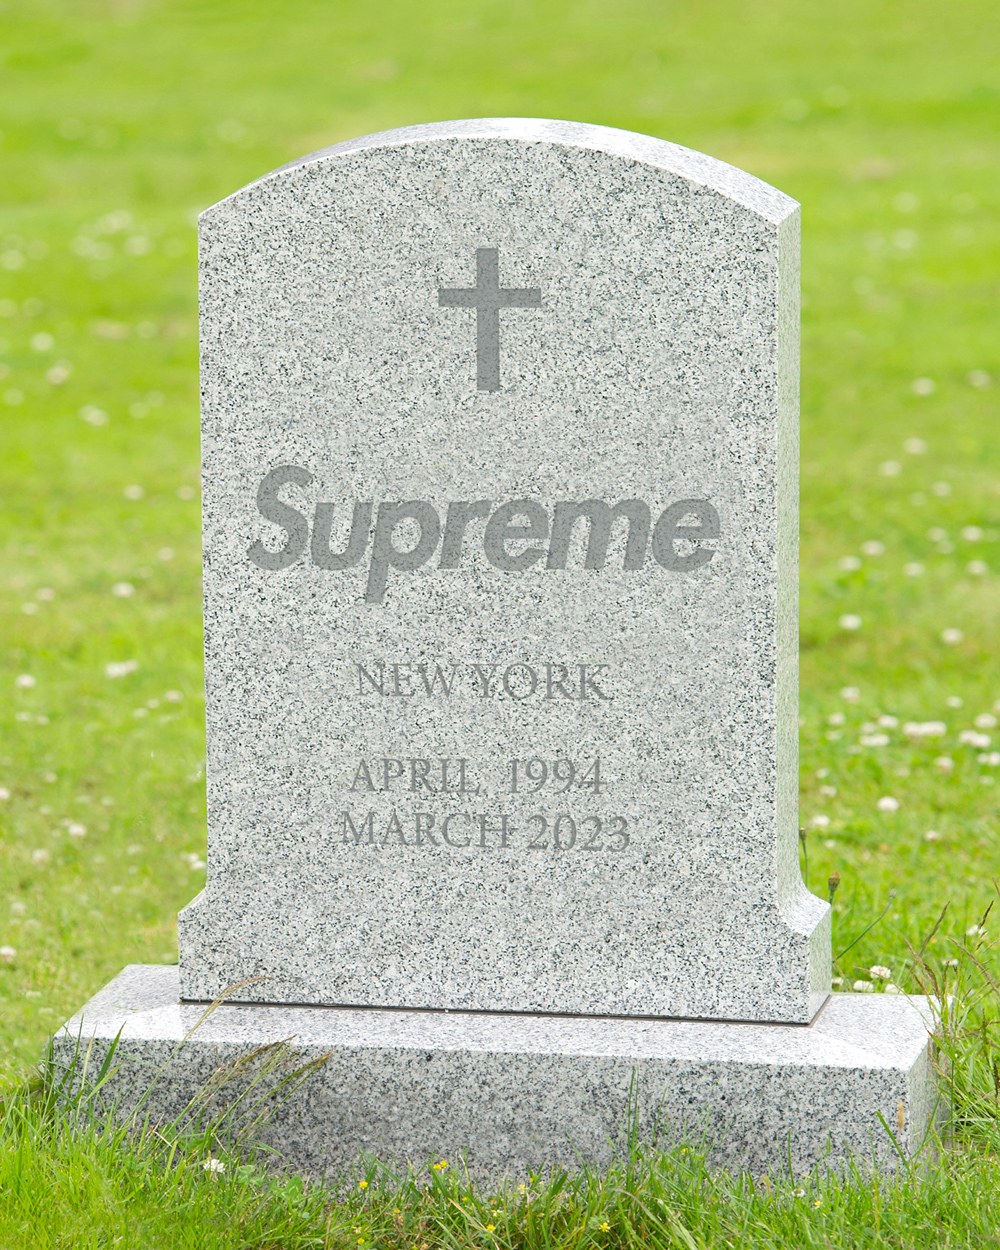 Is Supreme dead?